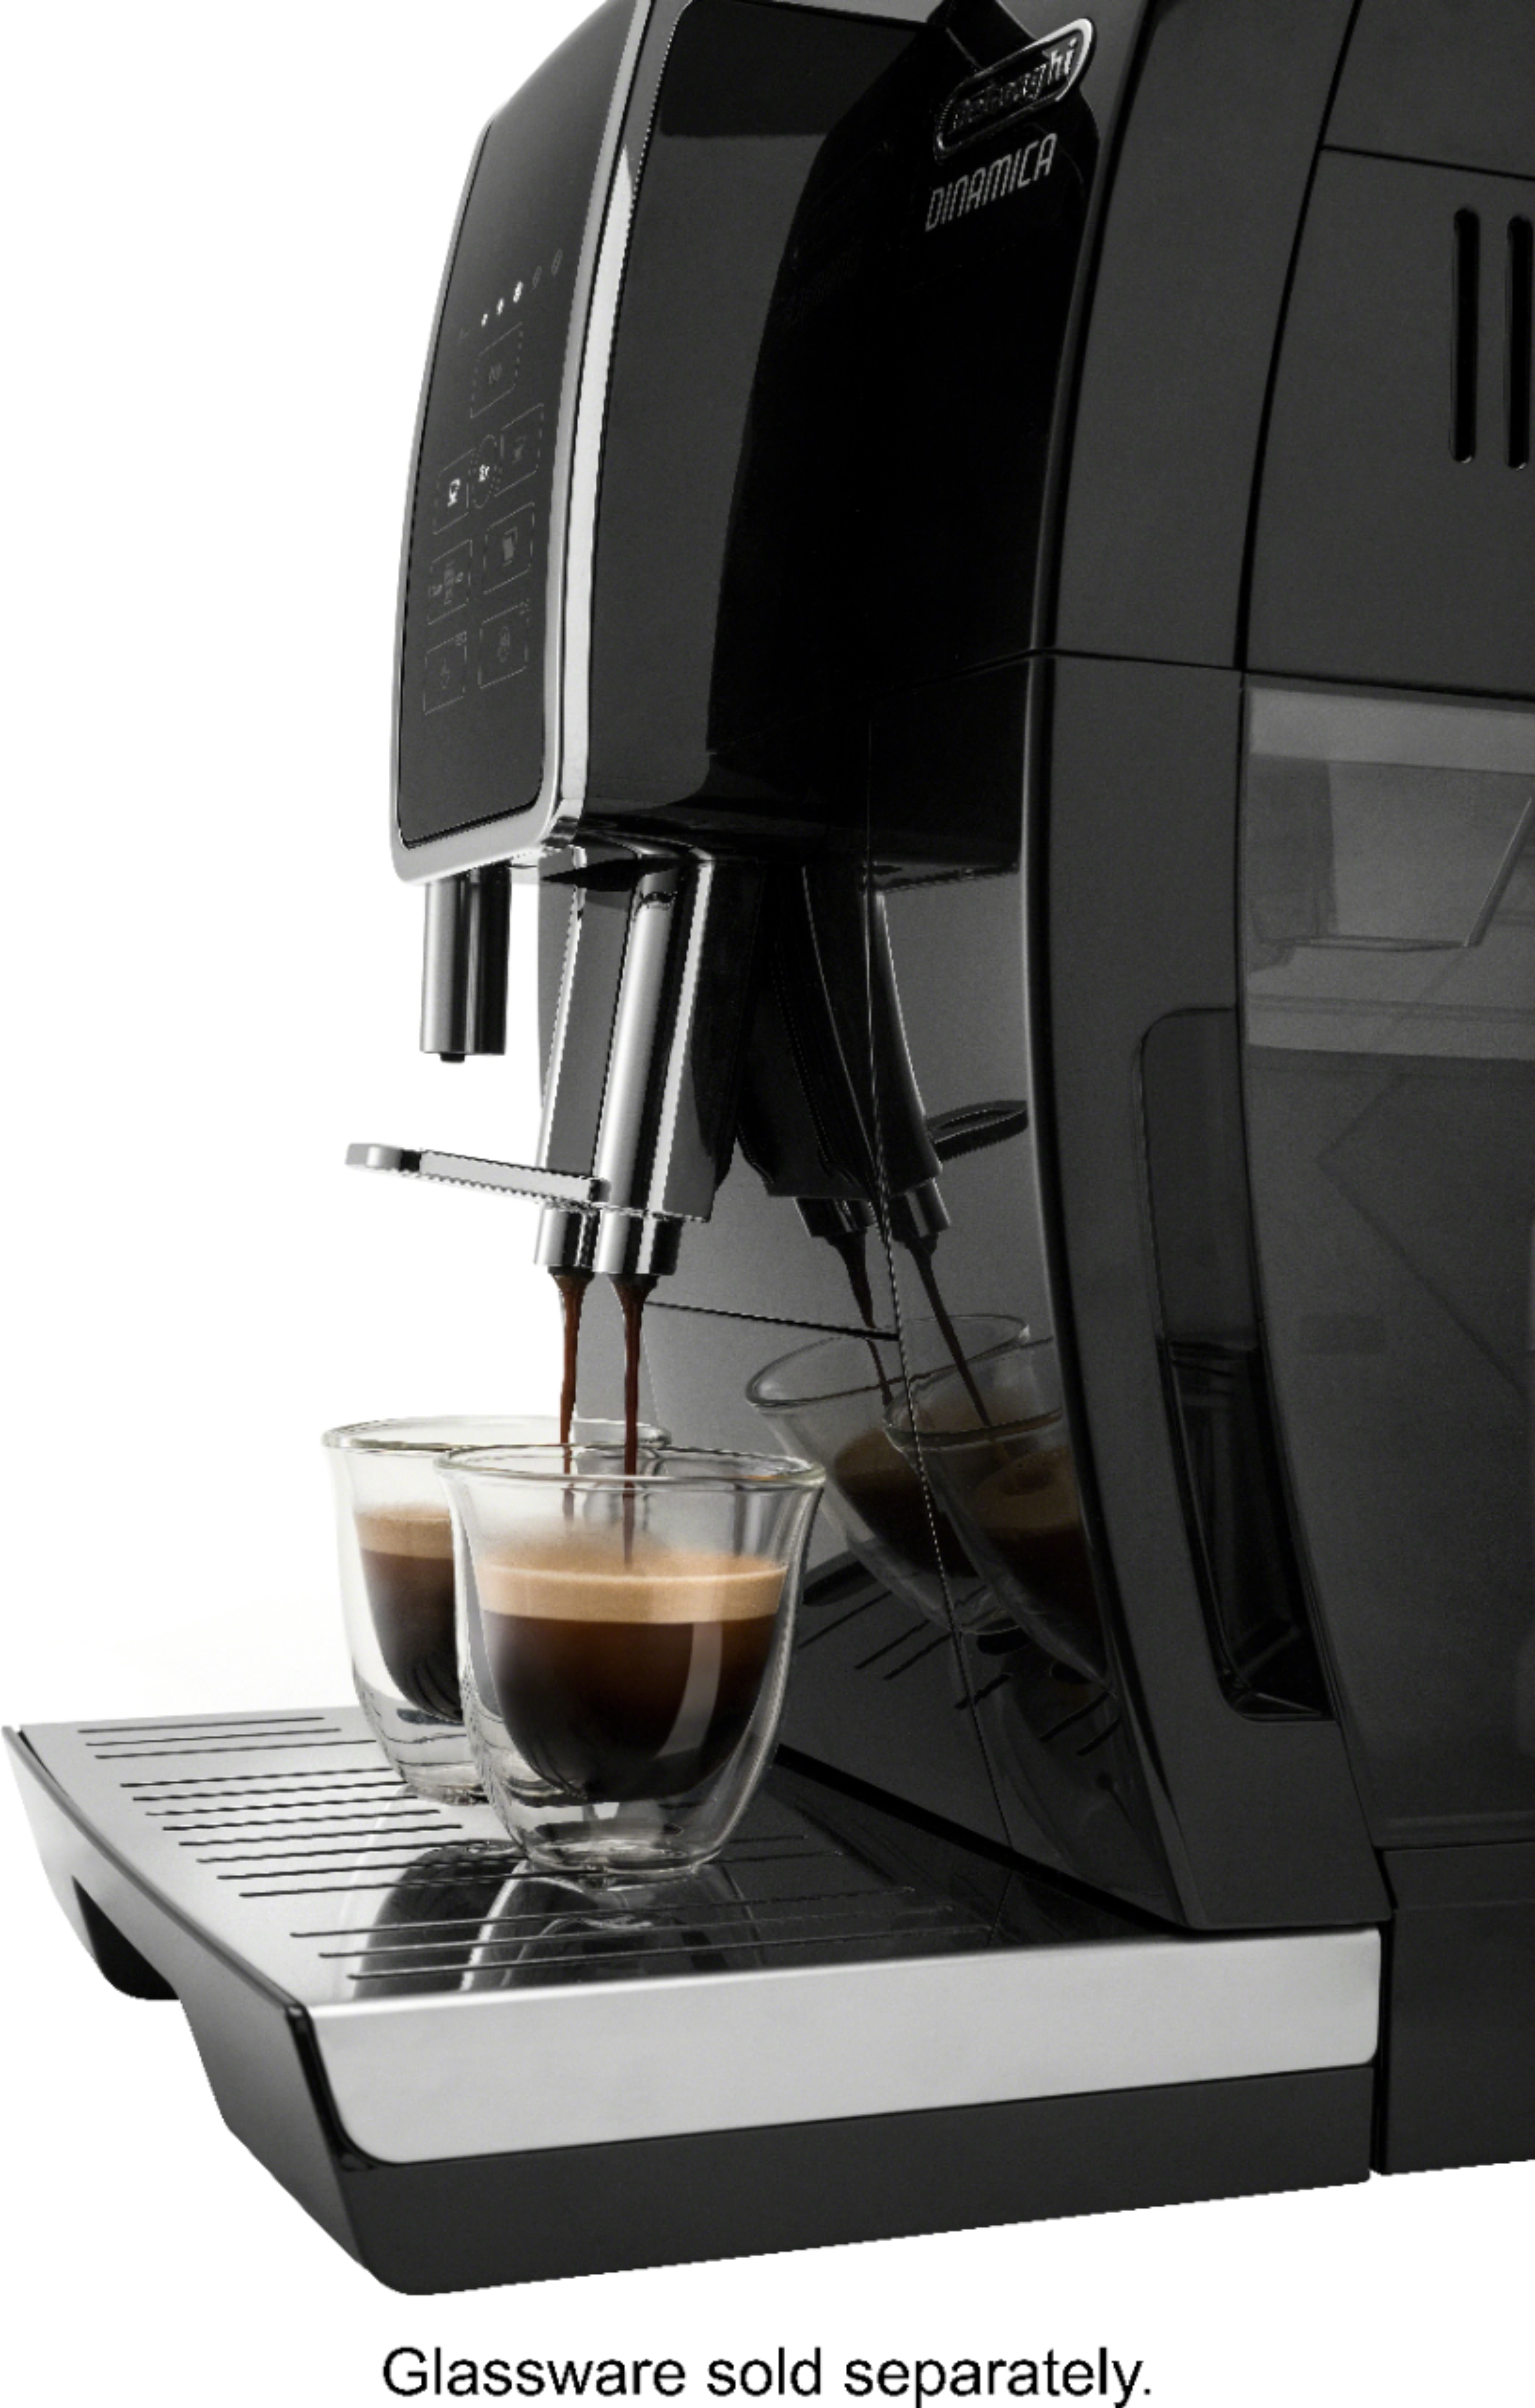 De'Longhi Dinamica Automatic Coffee & Espresso Machine